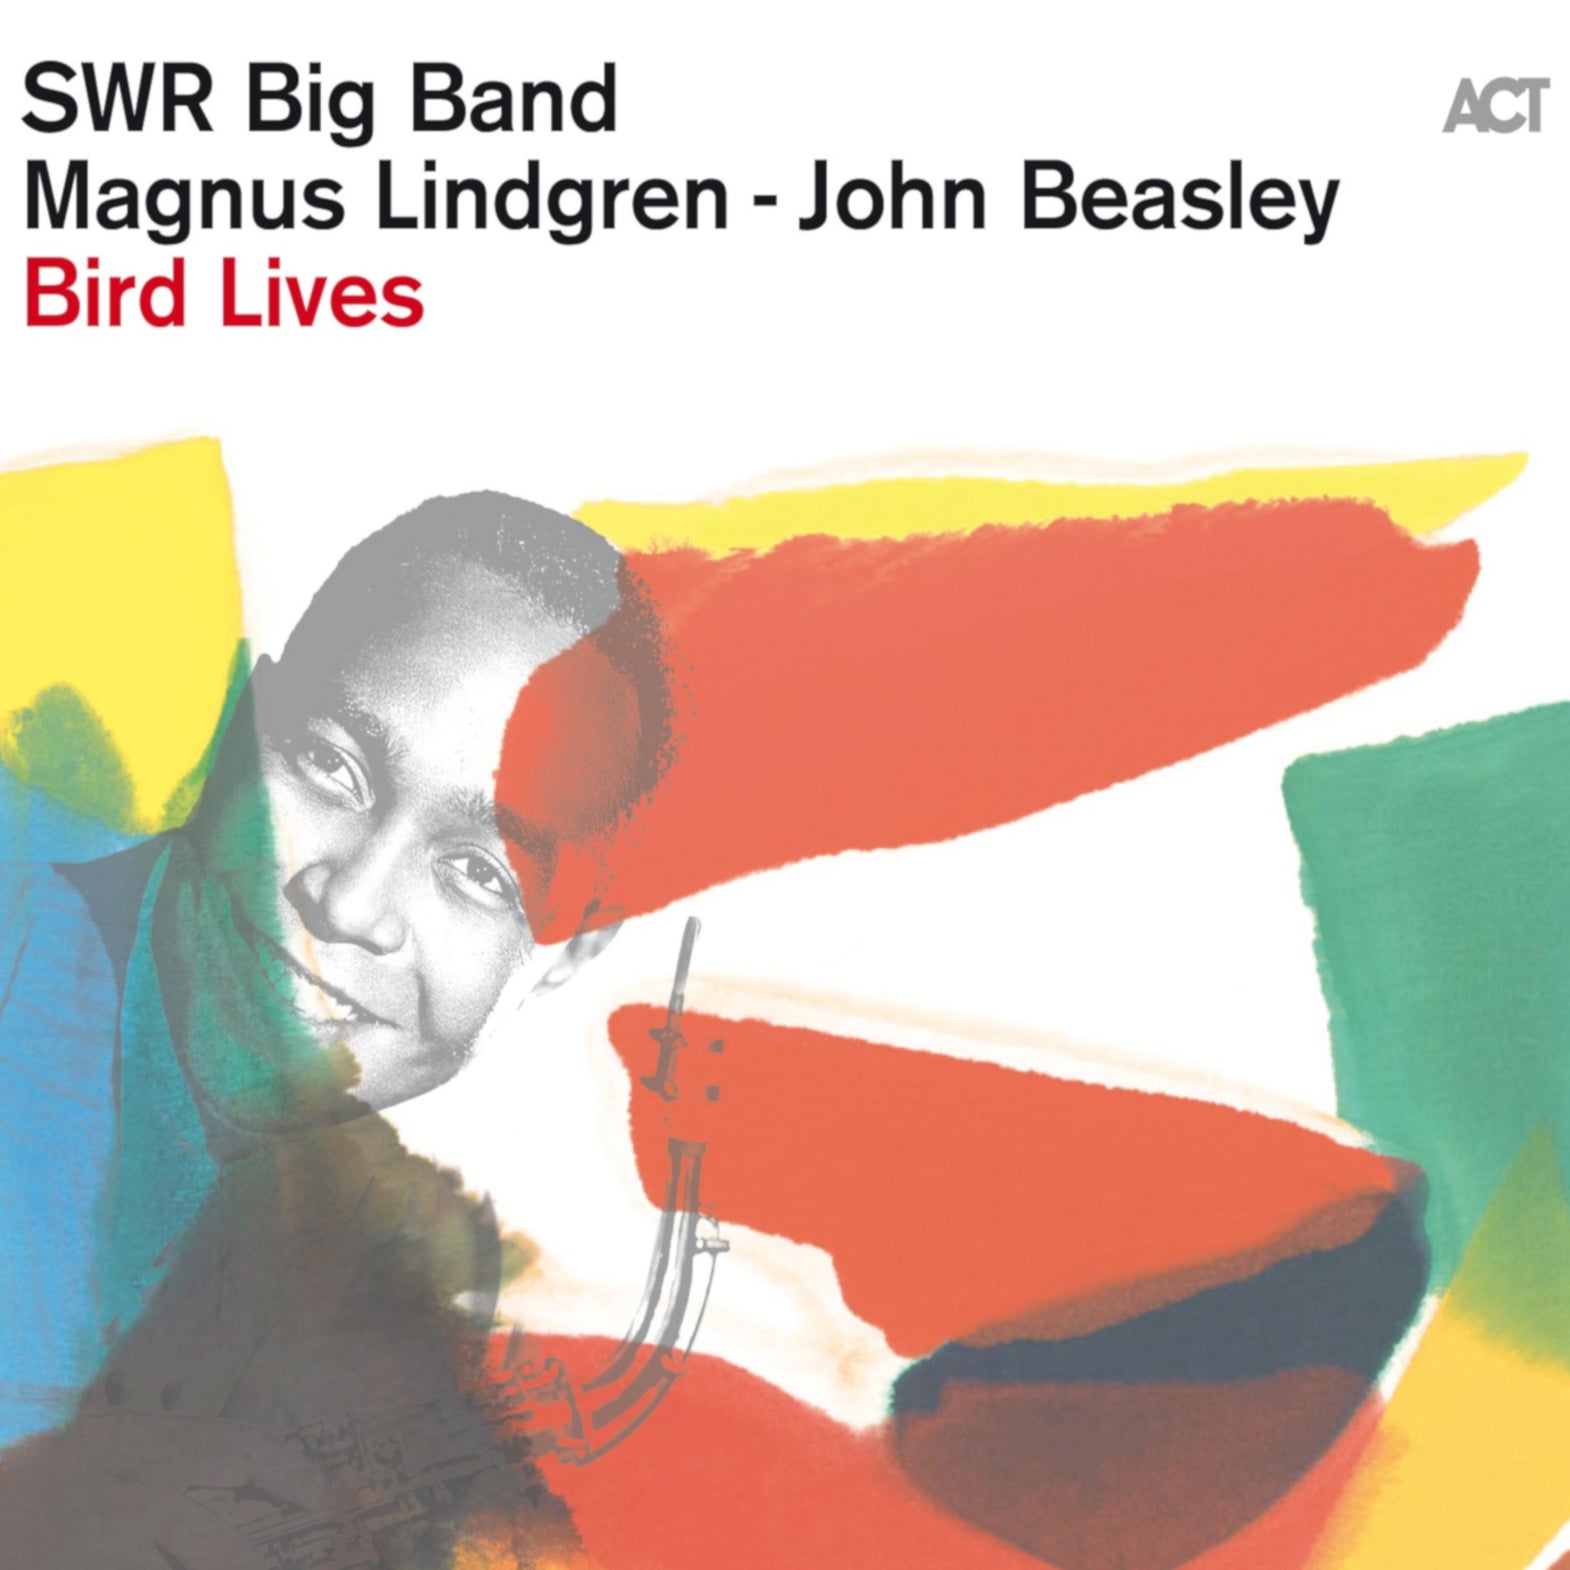 JOHN BEASLEY, MAGNUS LINDGREN, SWR BIG BAND - Bird Lives - LP [OCT 13]